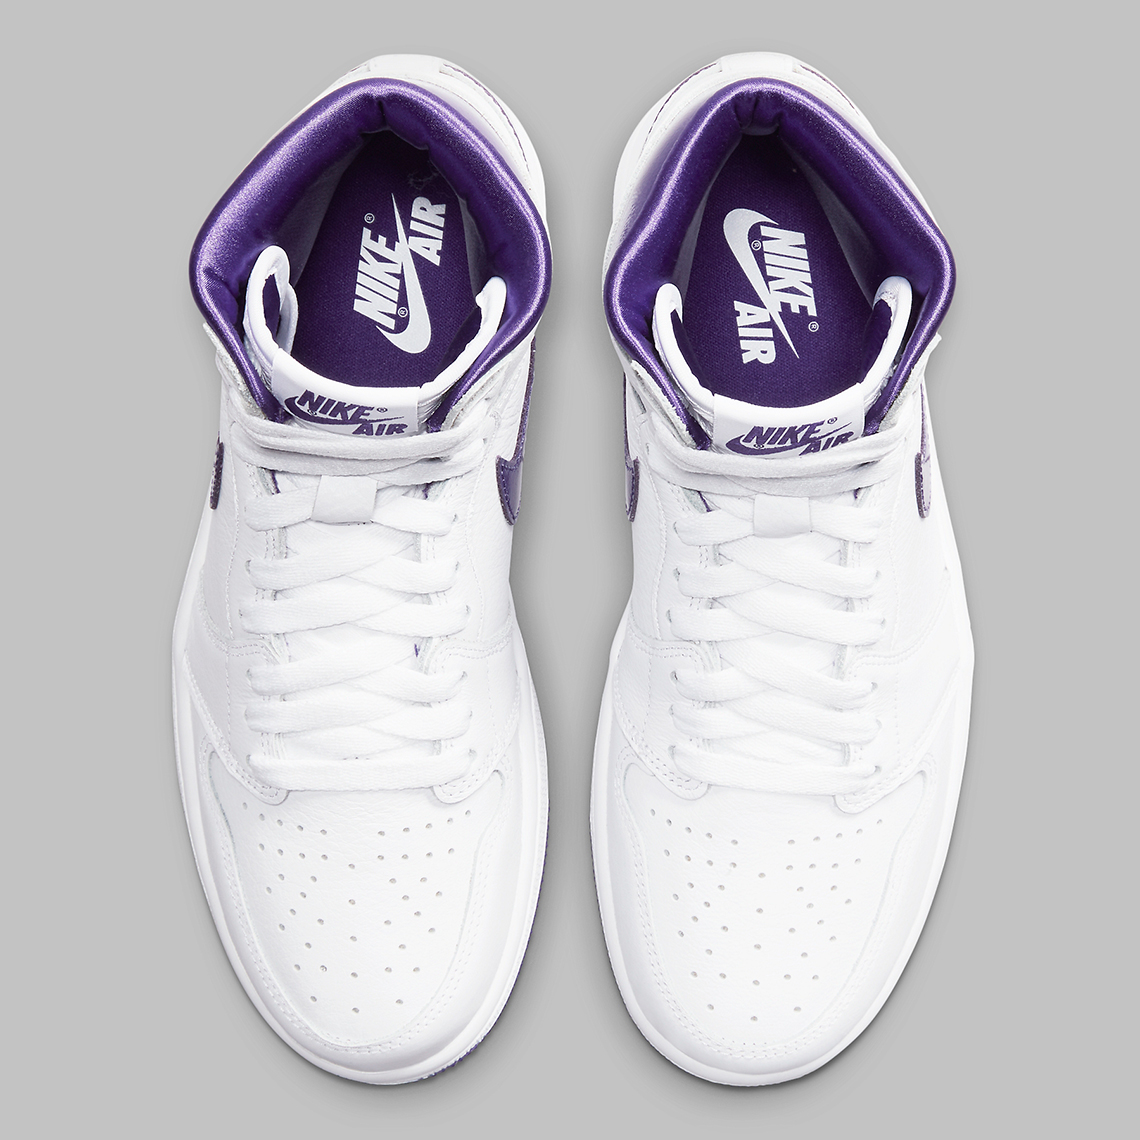 3cpe8n-l-610×610-shoes-sneakers-fashion-style-jordans-purple-blue